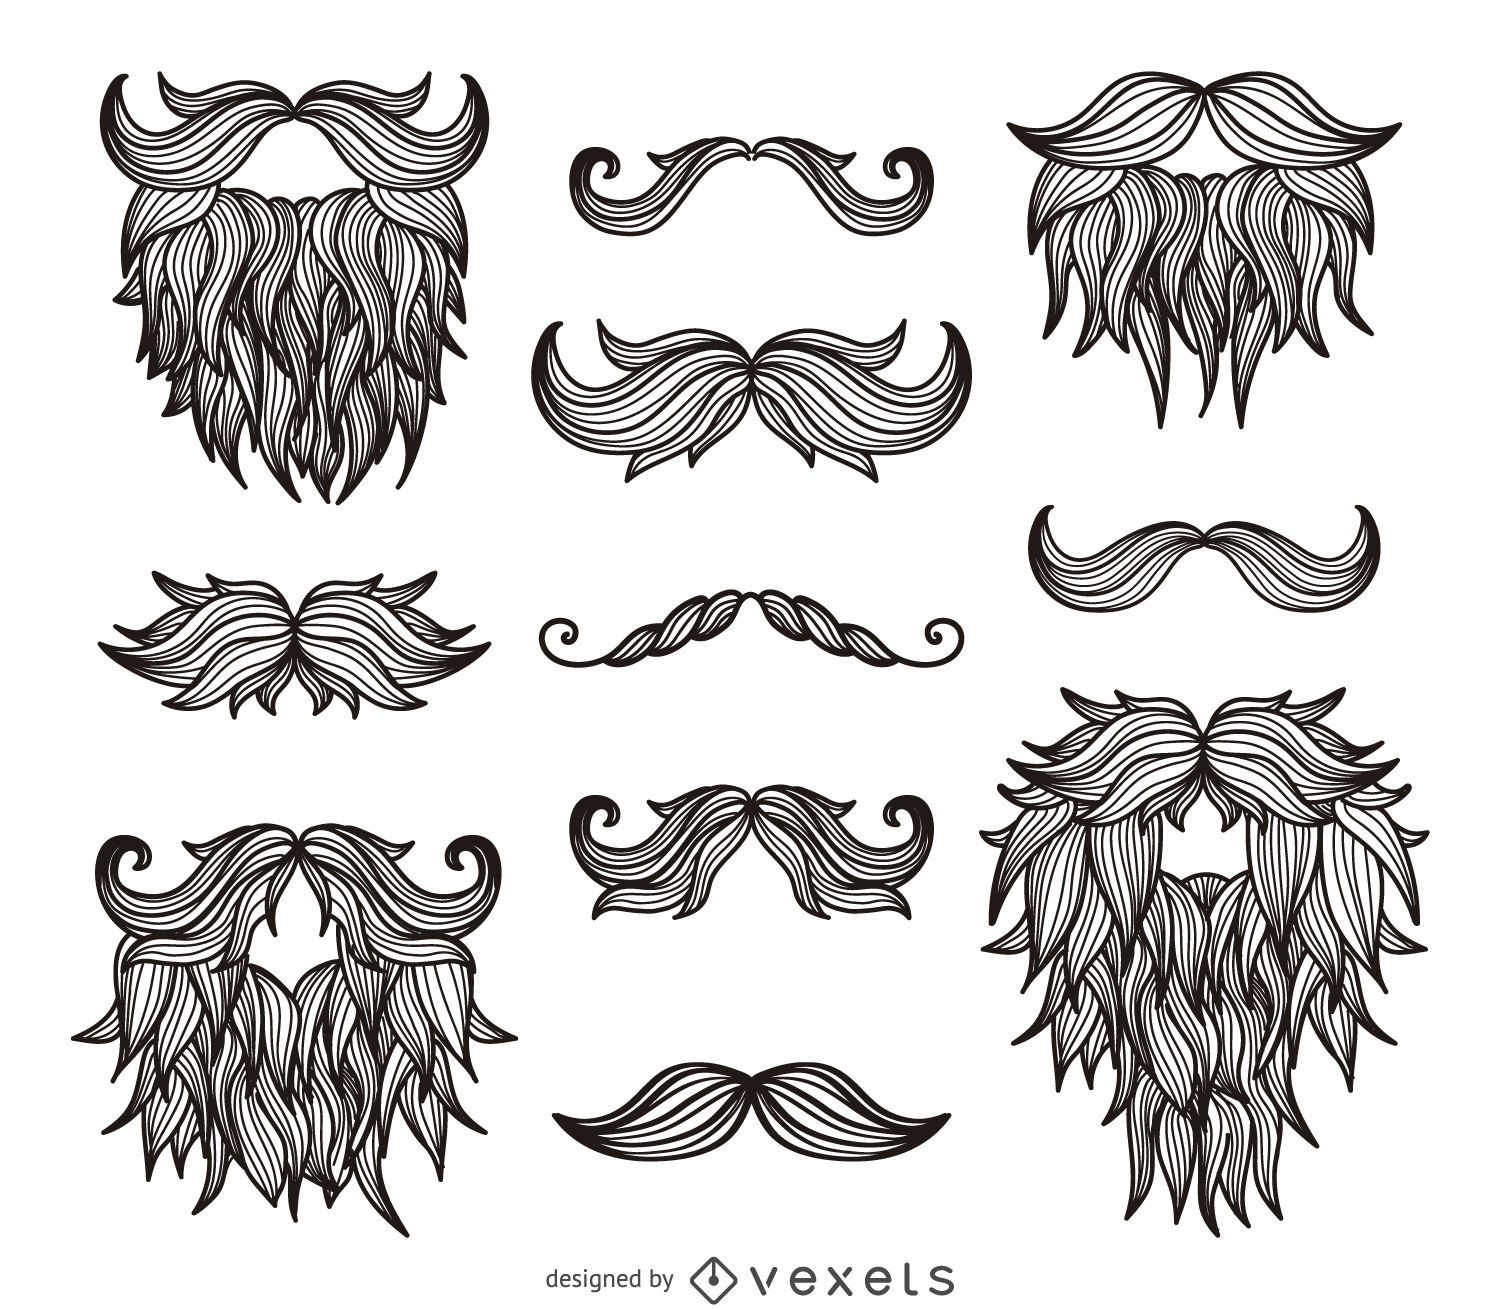 Dibujo de barbas bigotes hipster